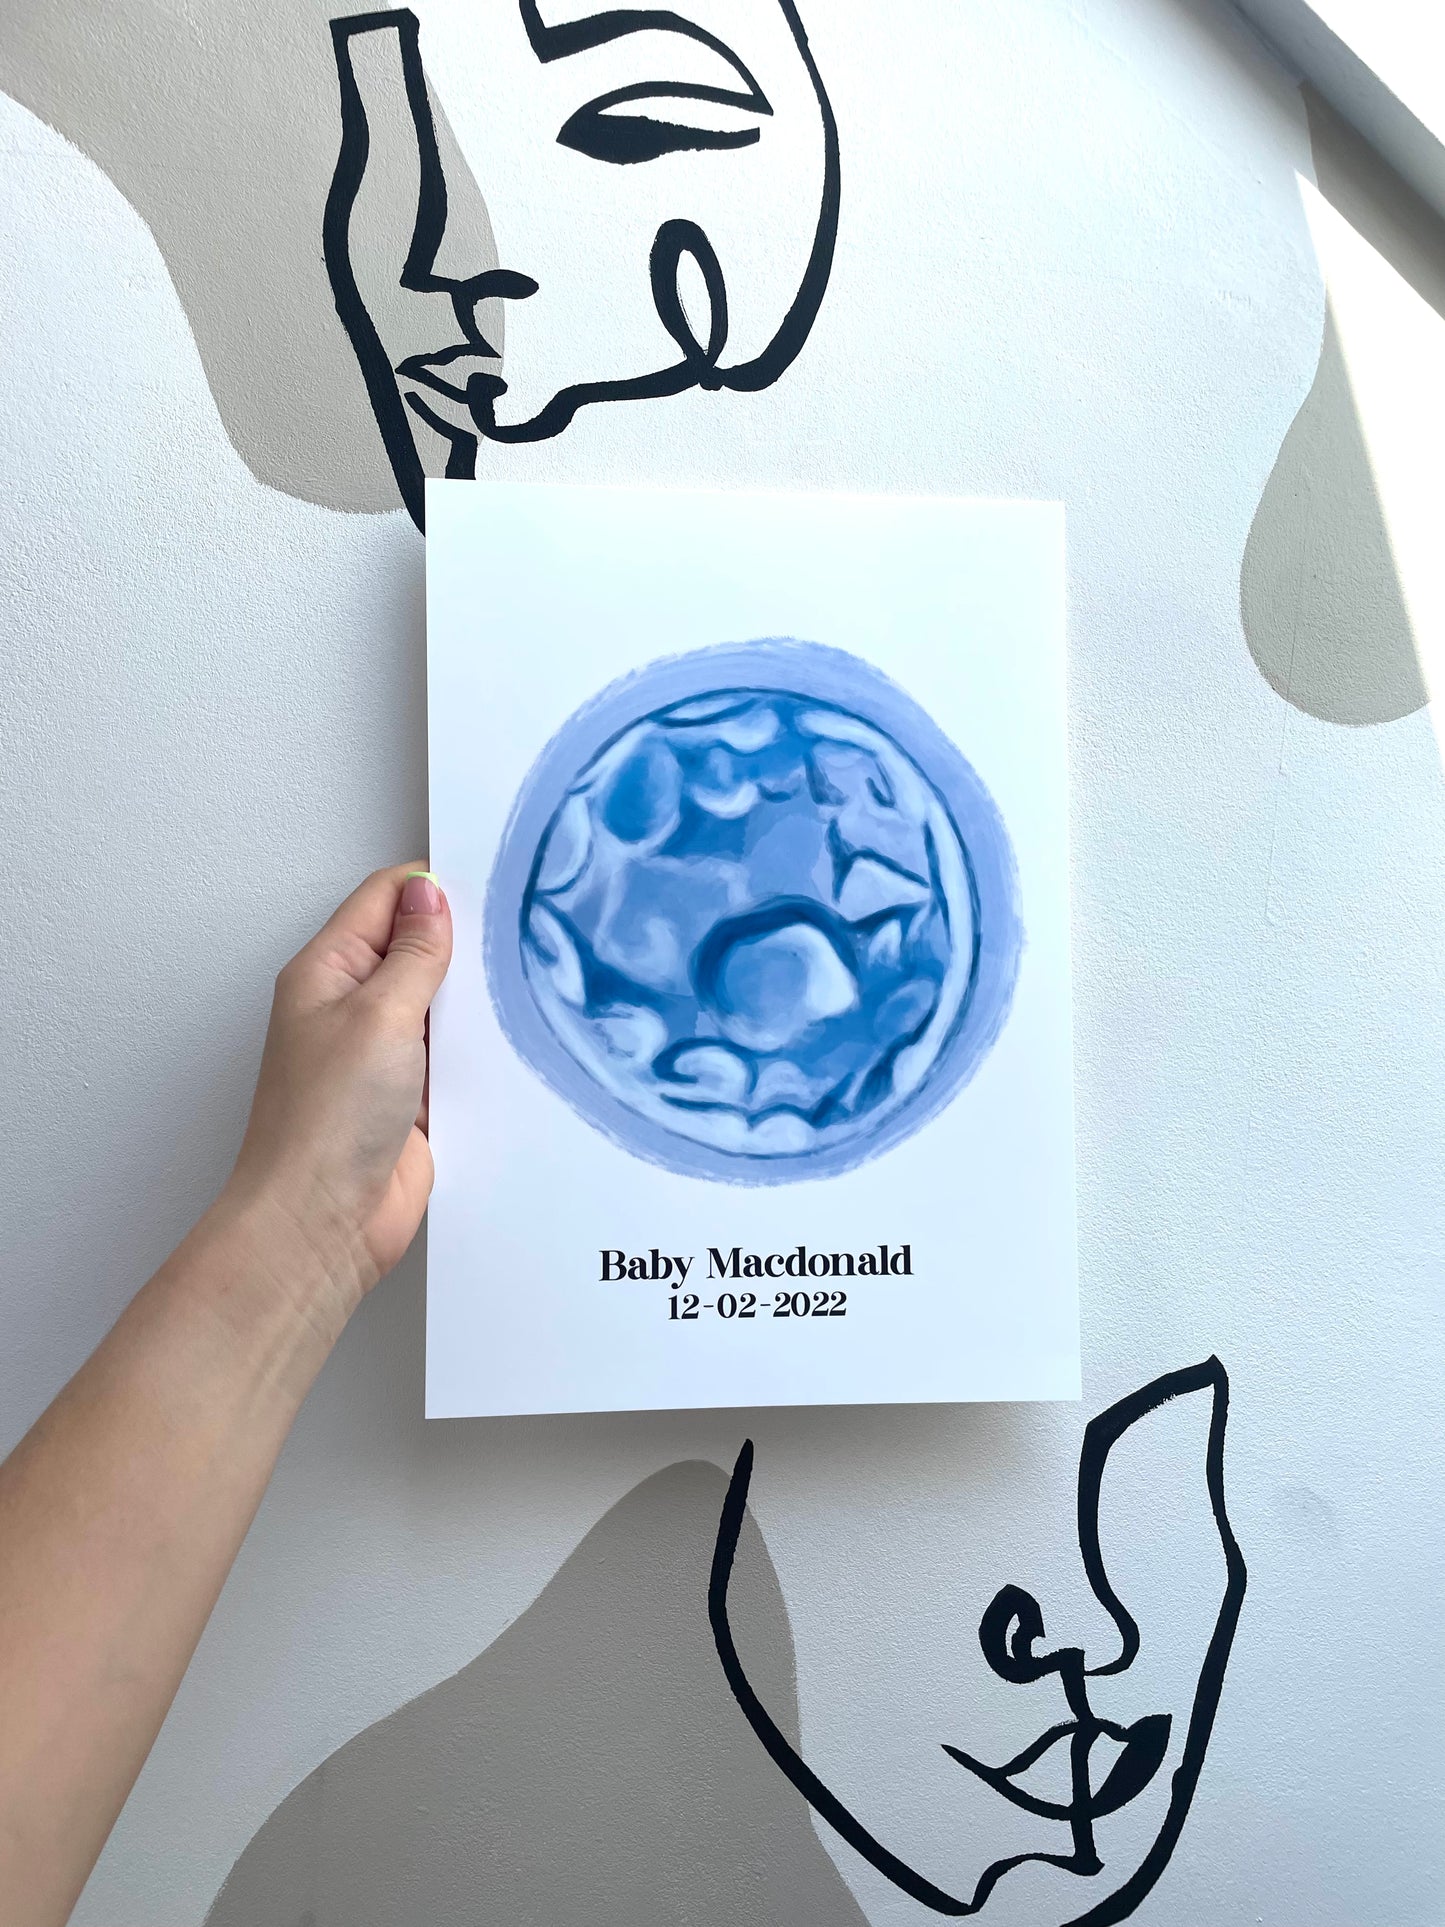 CUSTOM IVF Embryo Portrait Wall Print